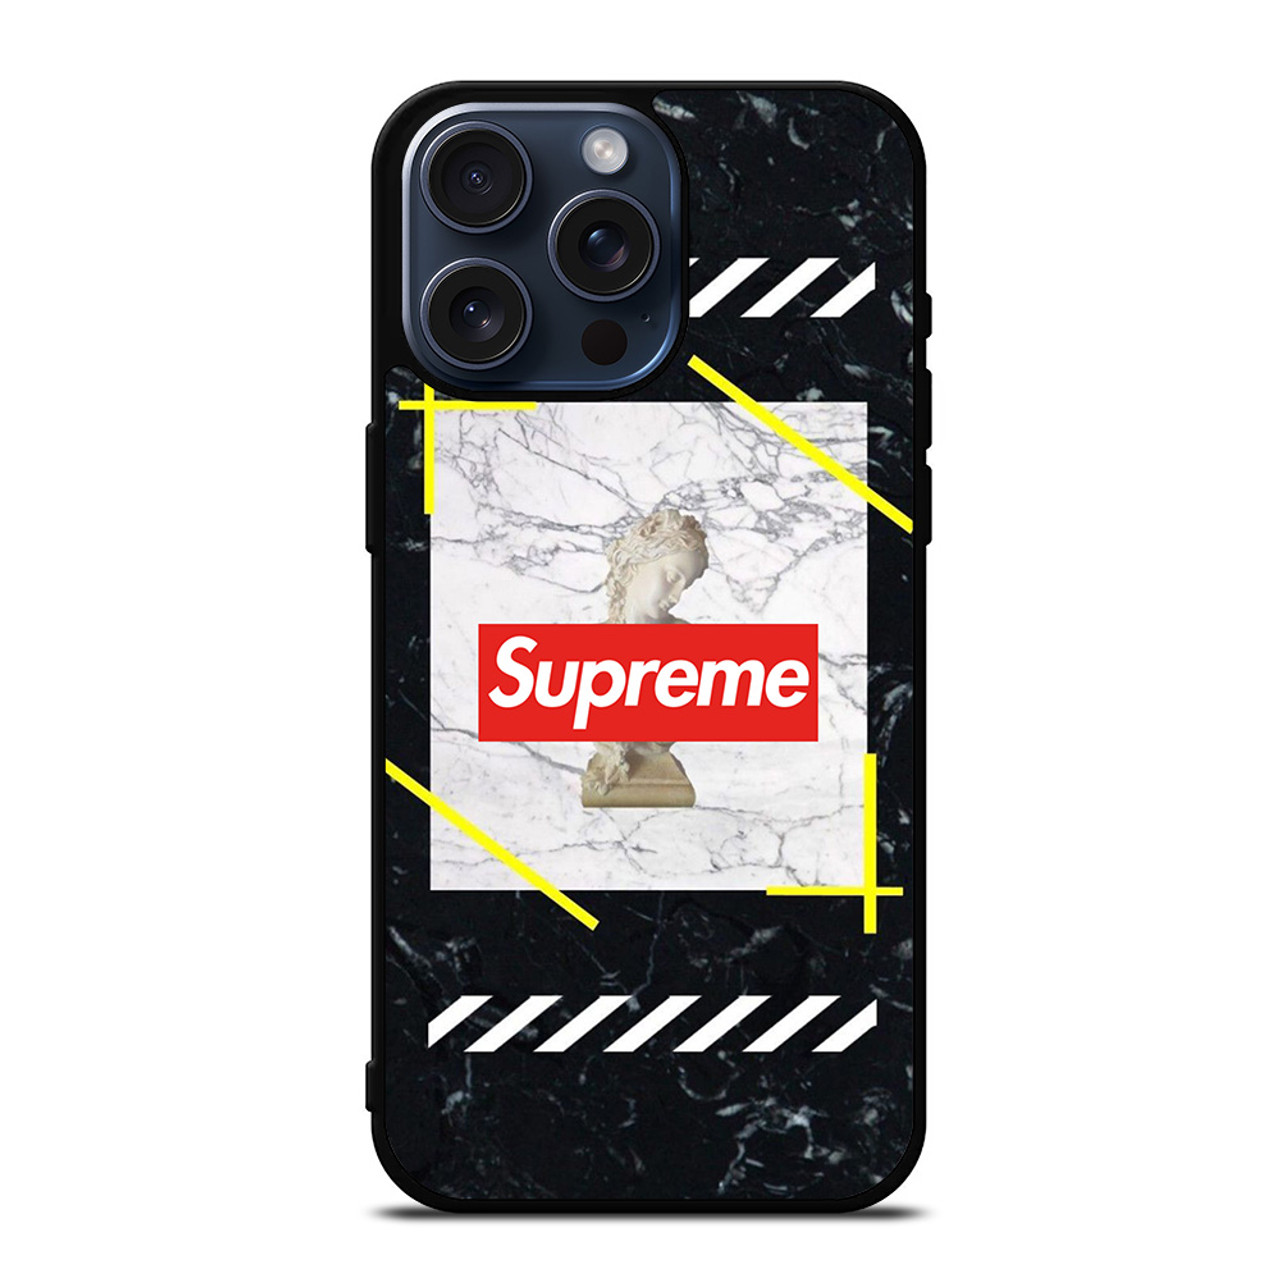 Supreme Iphone Case